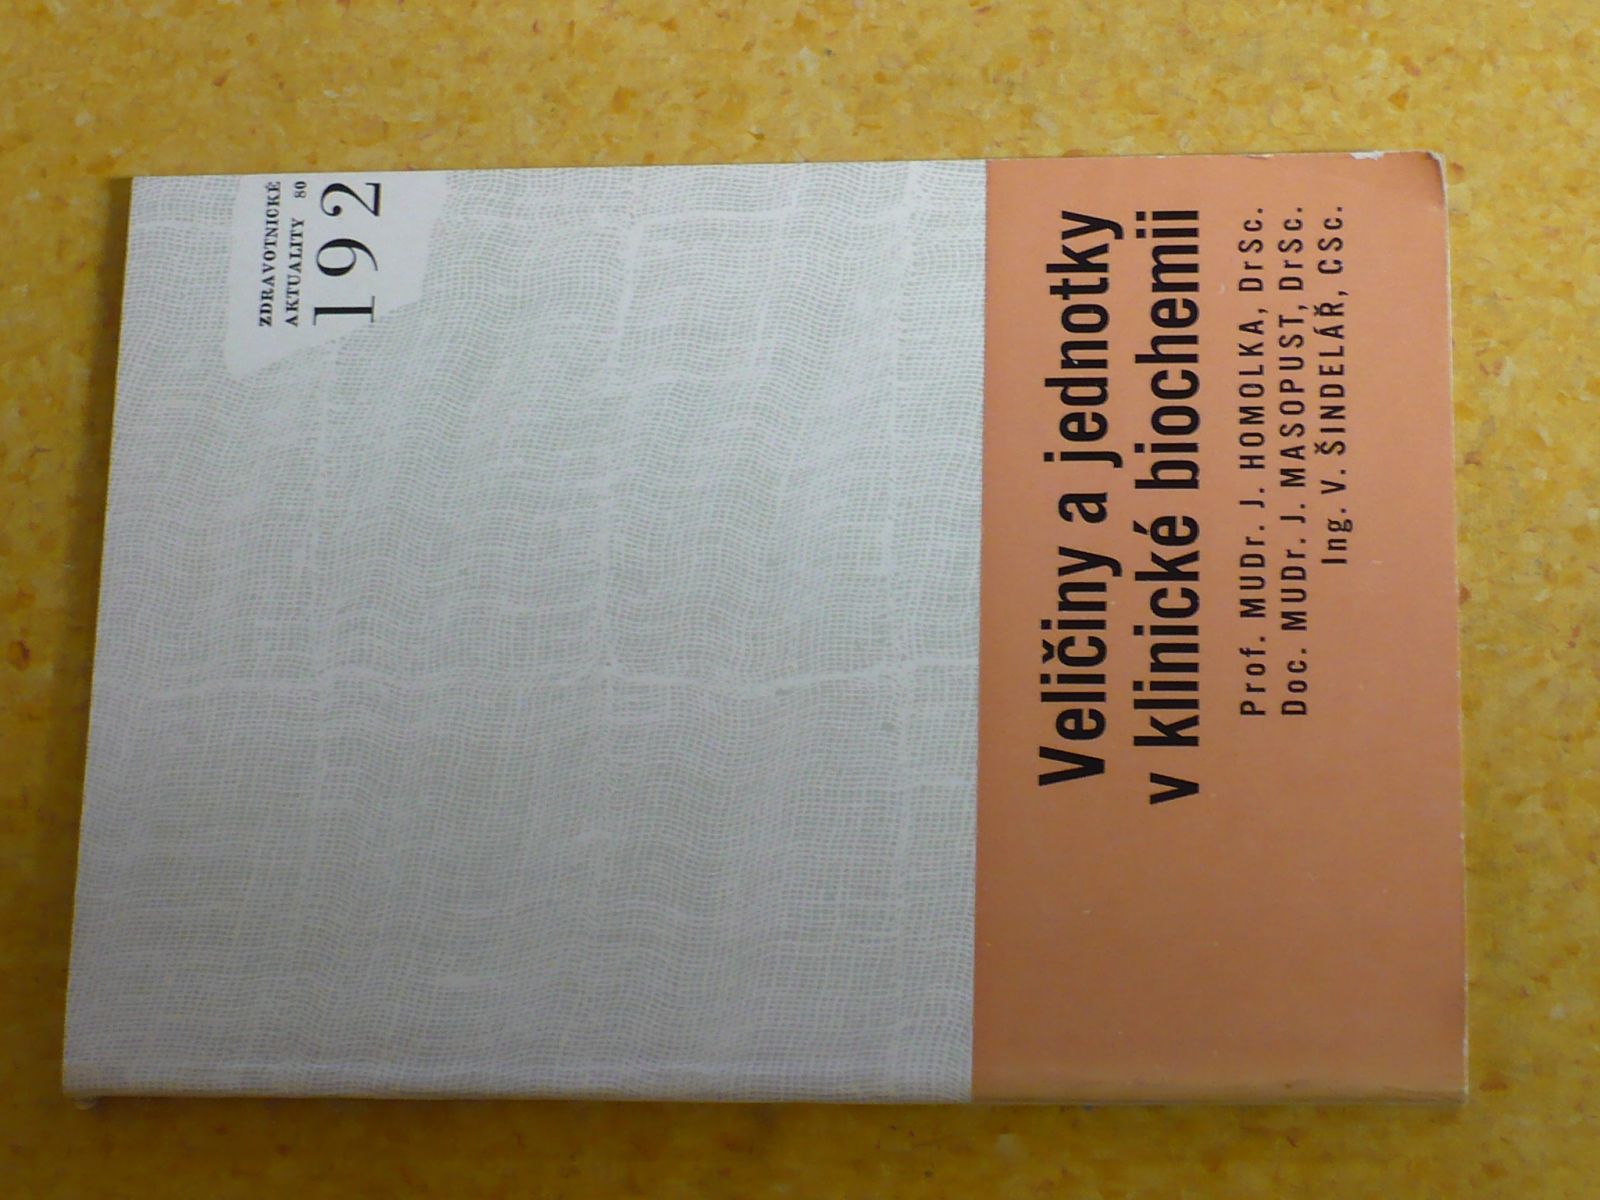 Homolka, Masopust, Šindelář - Veličiny a jednotky v klinické biochemii (1980)